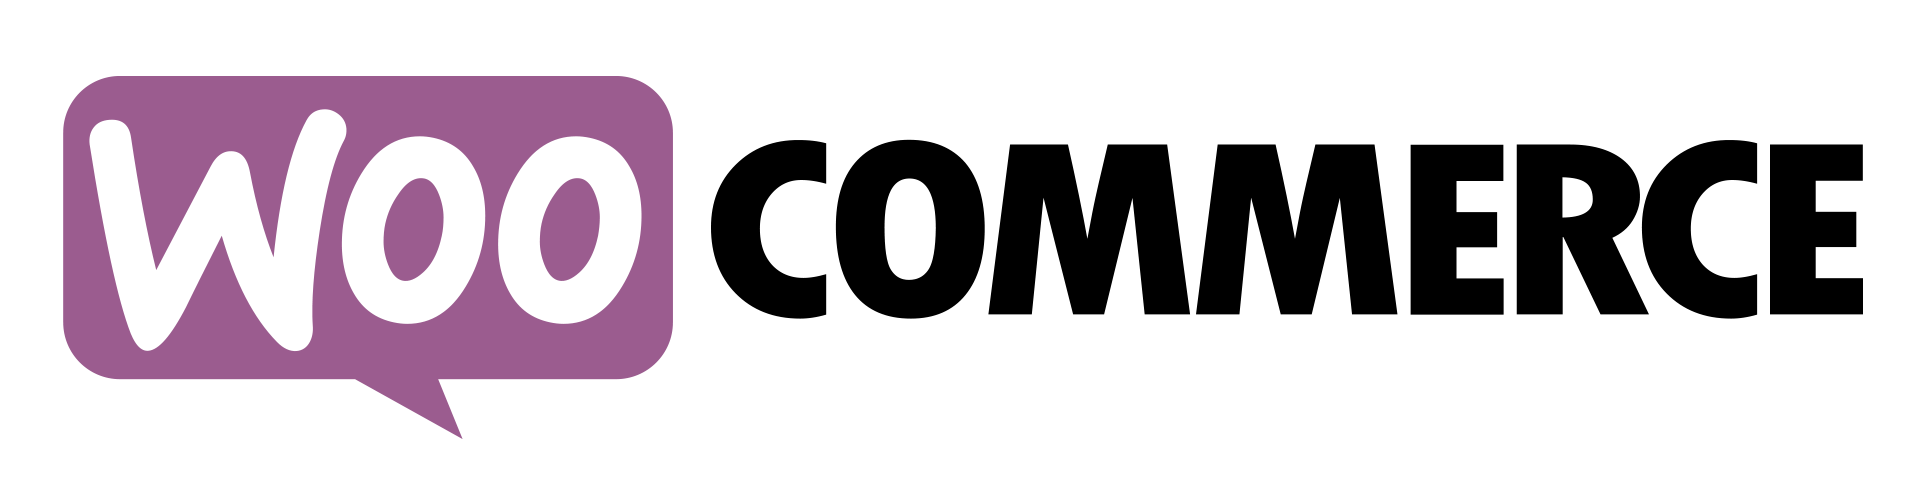 woocommerce-logo-e1429552613105